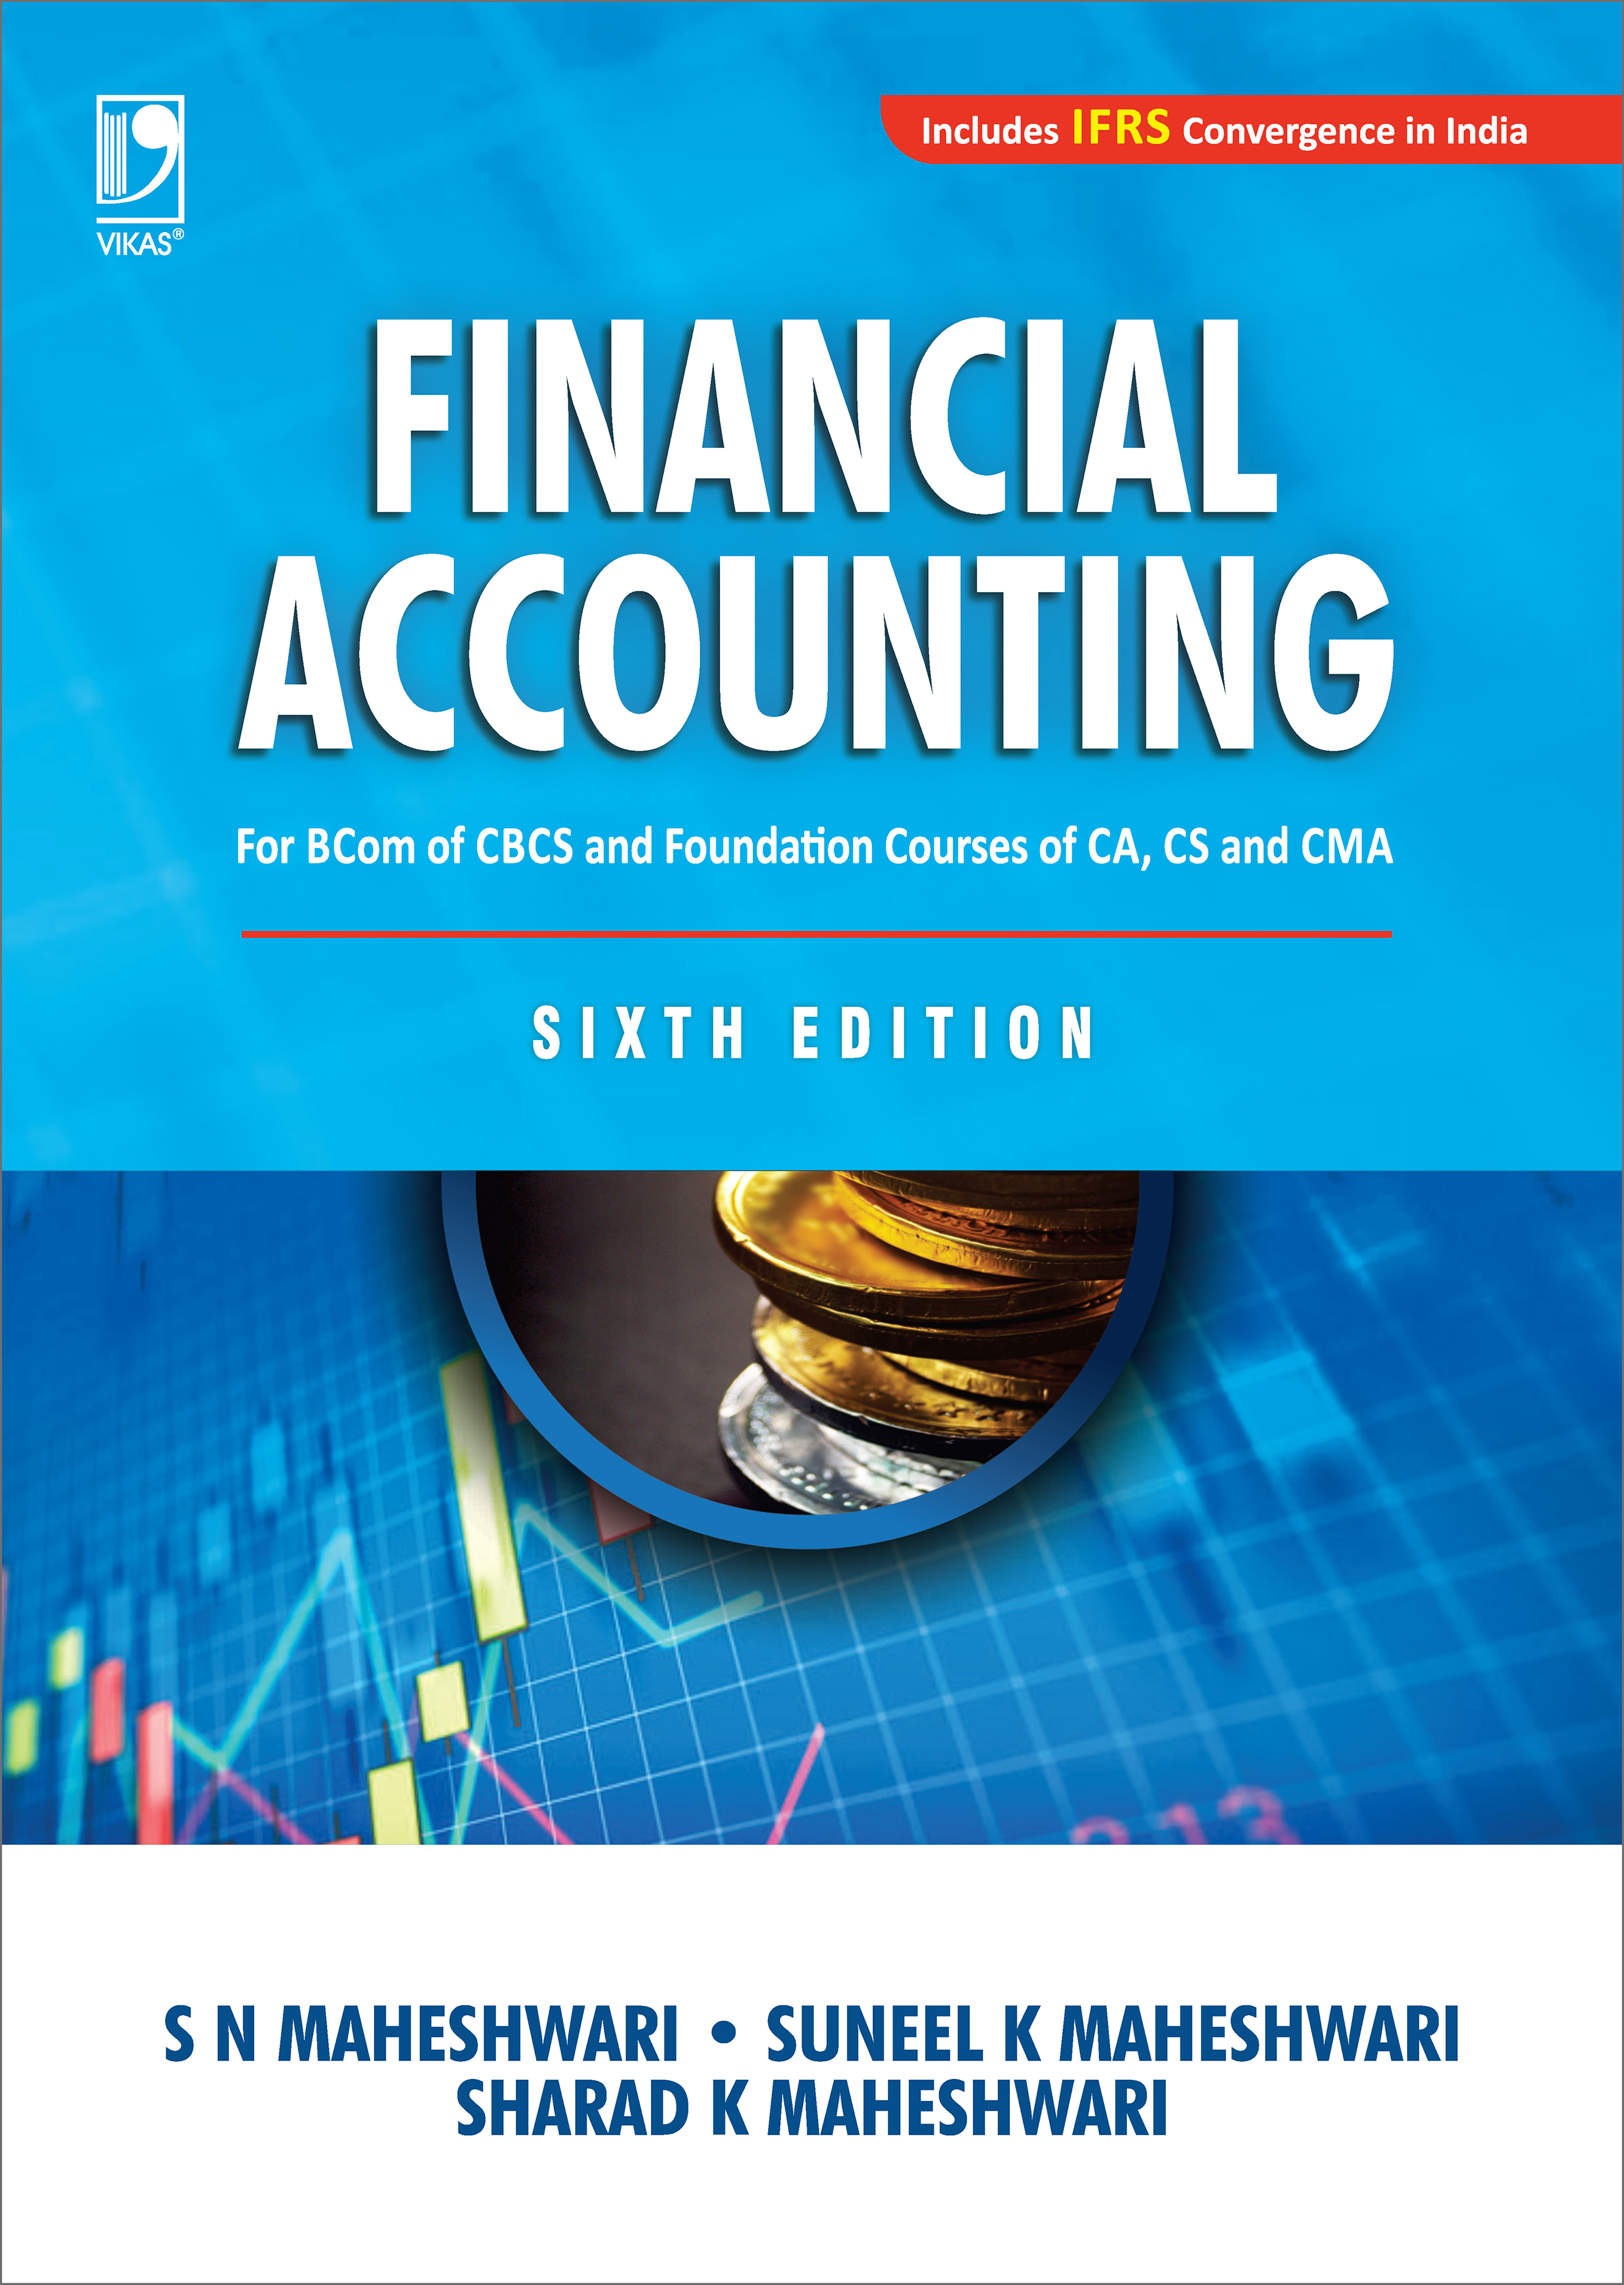 financial accounting program cobol